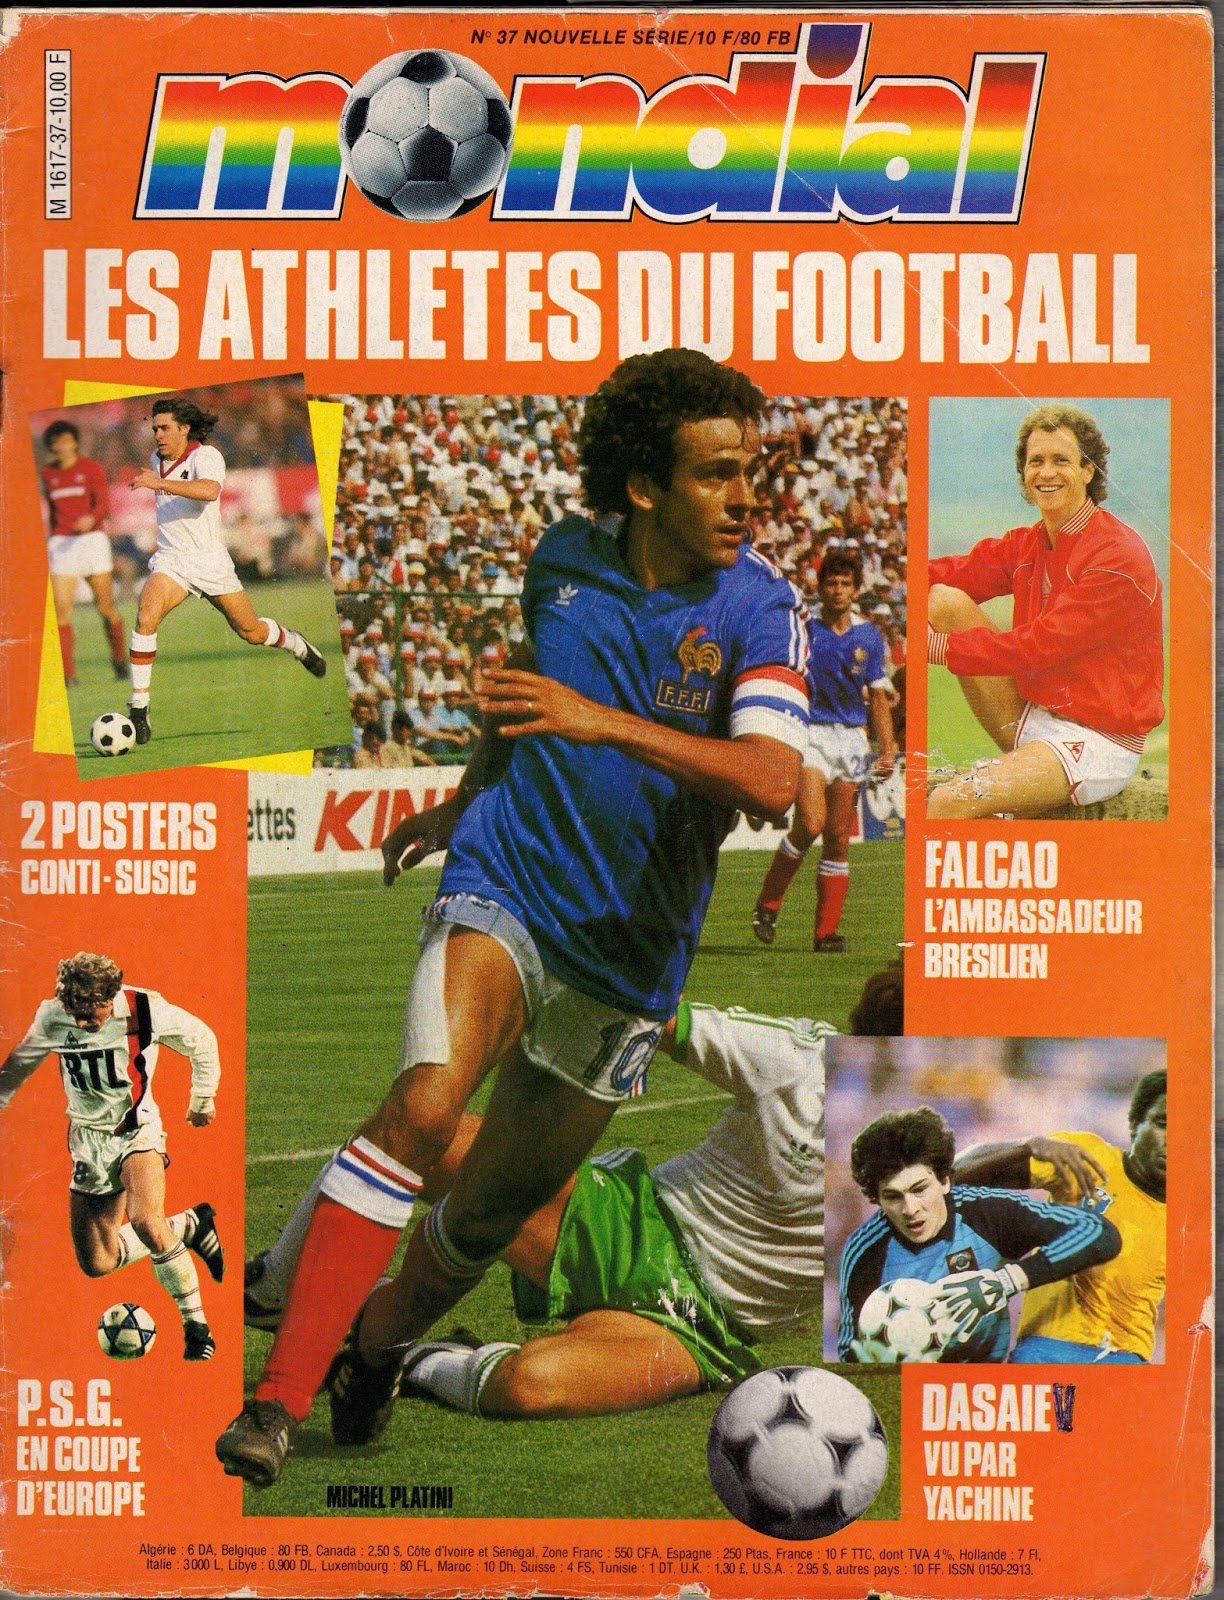 Part magazine. Футбольный журнал. Плакаты из журналов. Журнал onze. Постеры из журнала shoot Football.